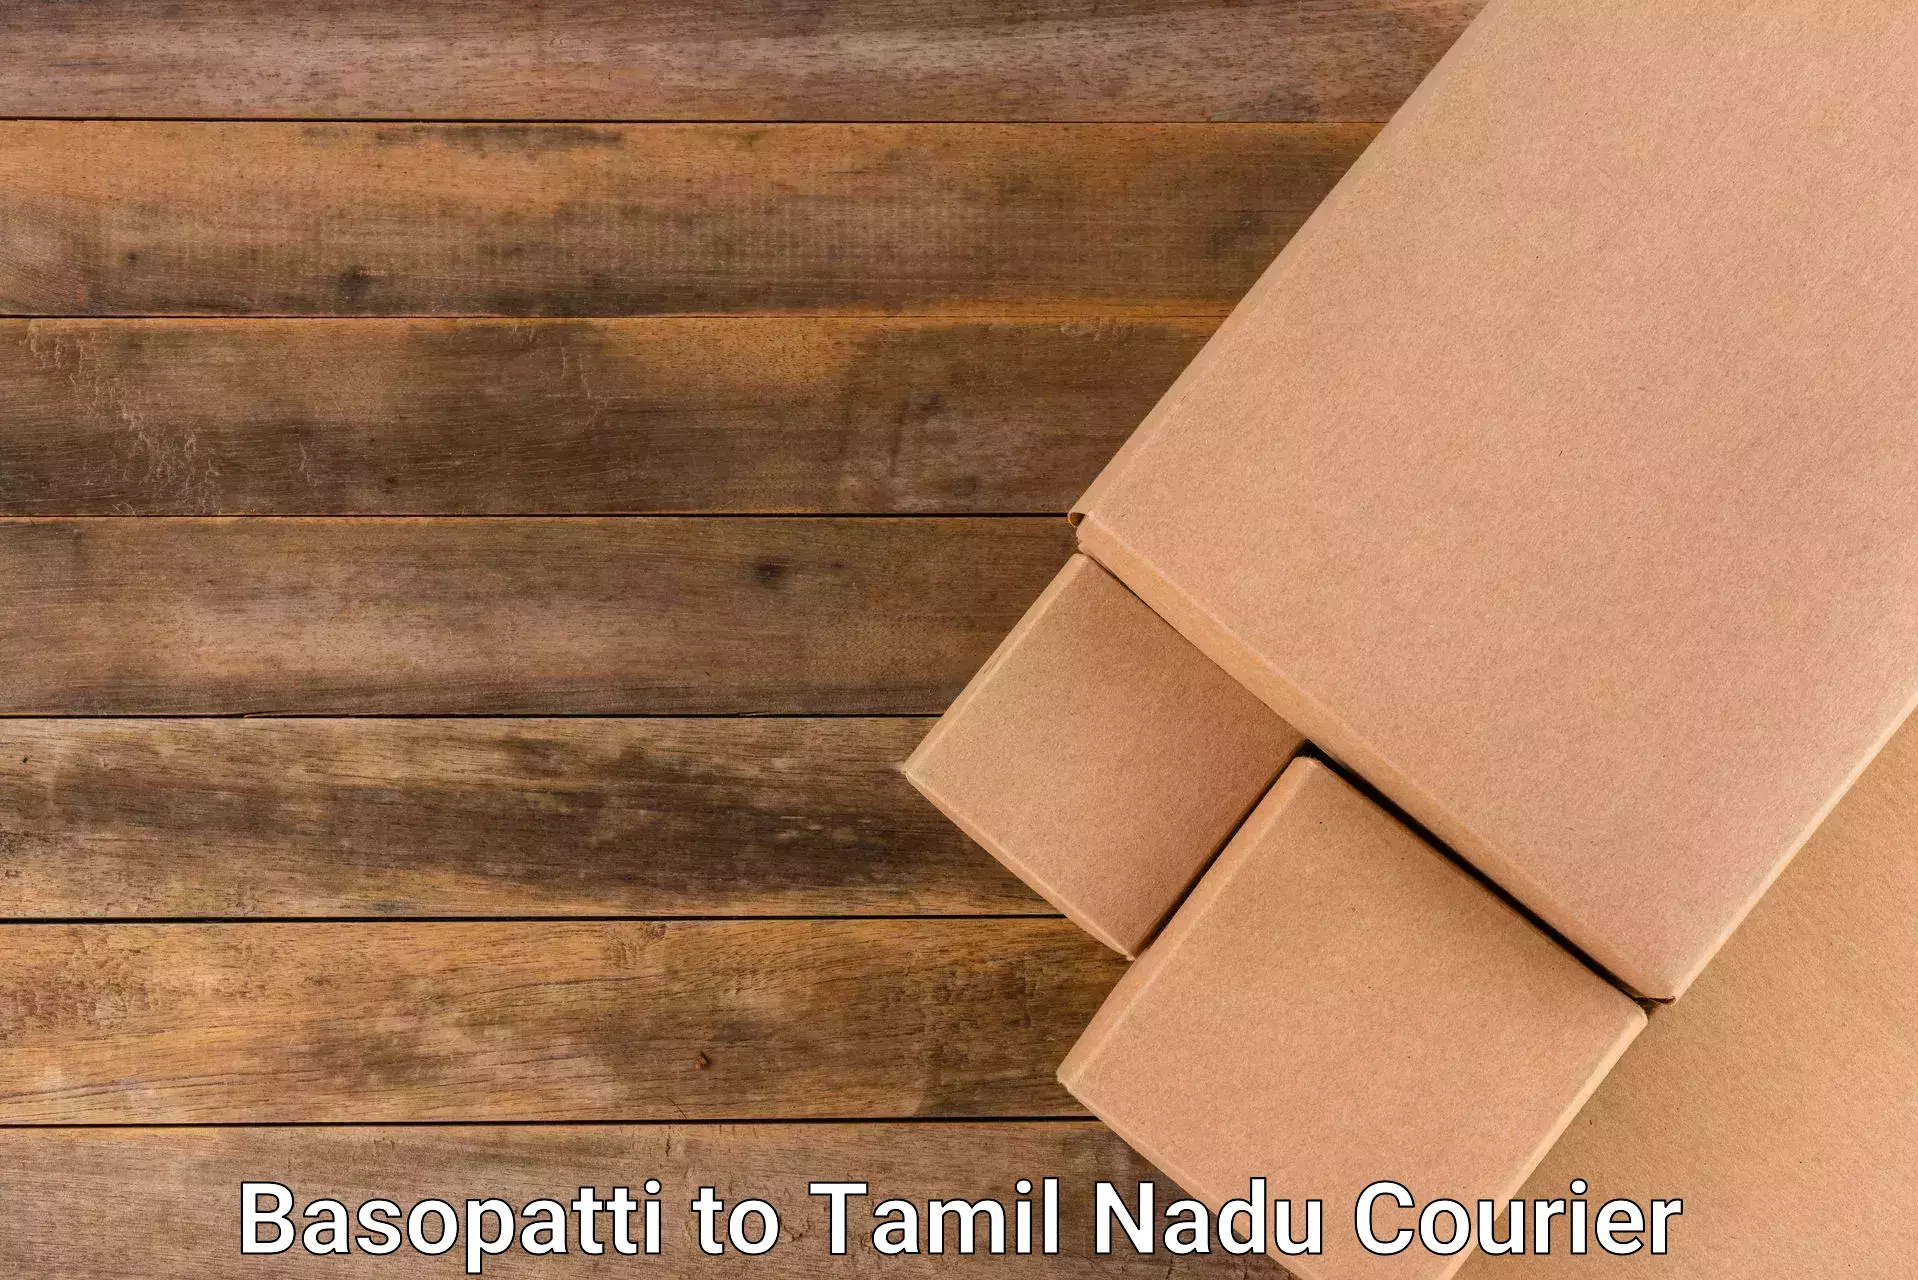 Overnight delivery services Basopatti to Tamil Nadu